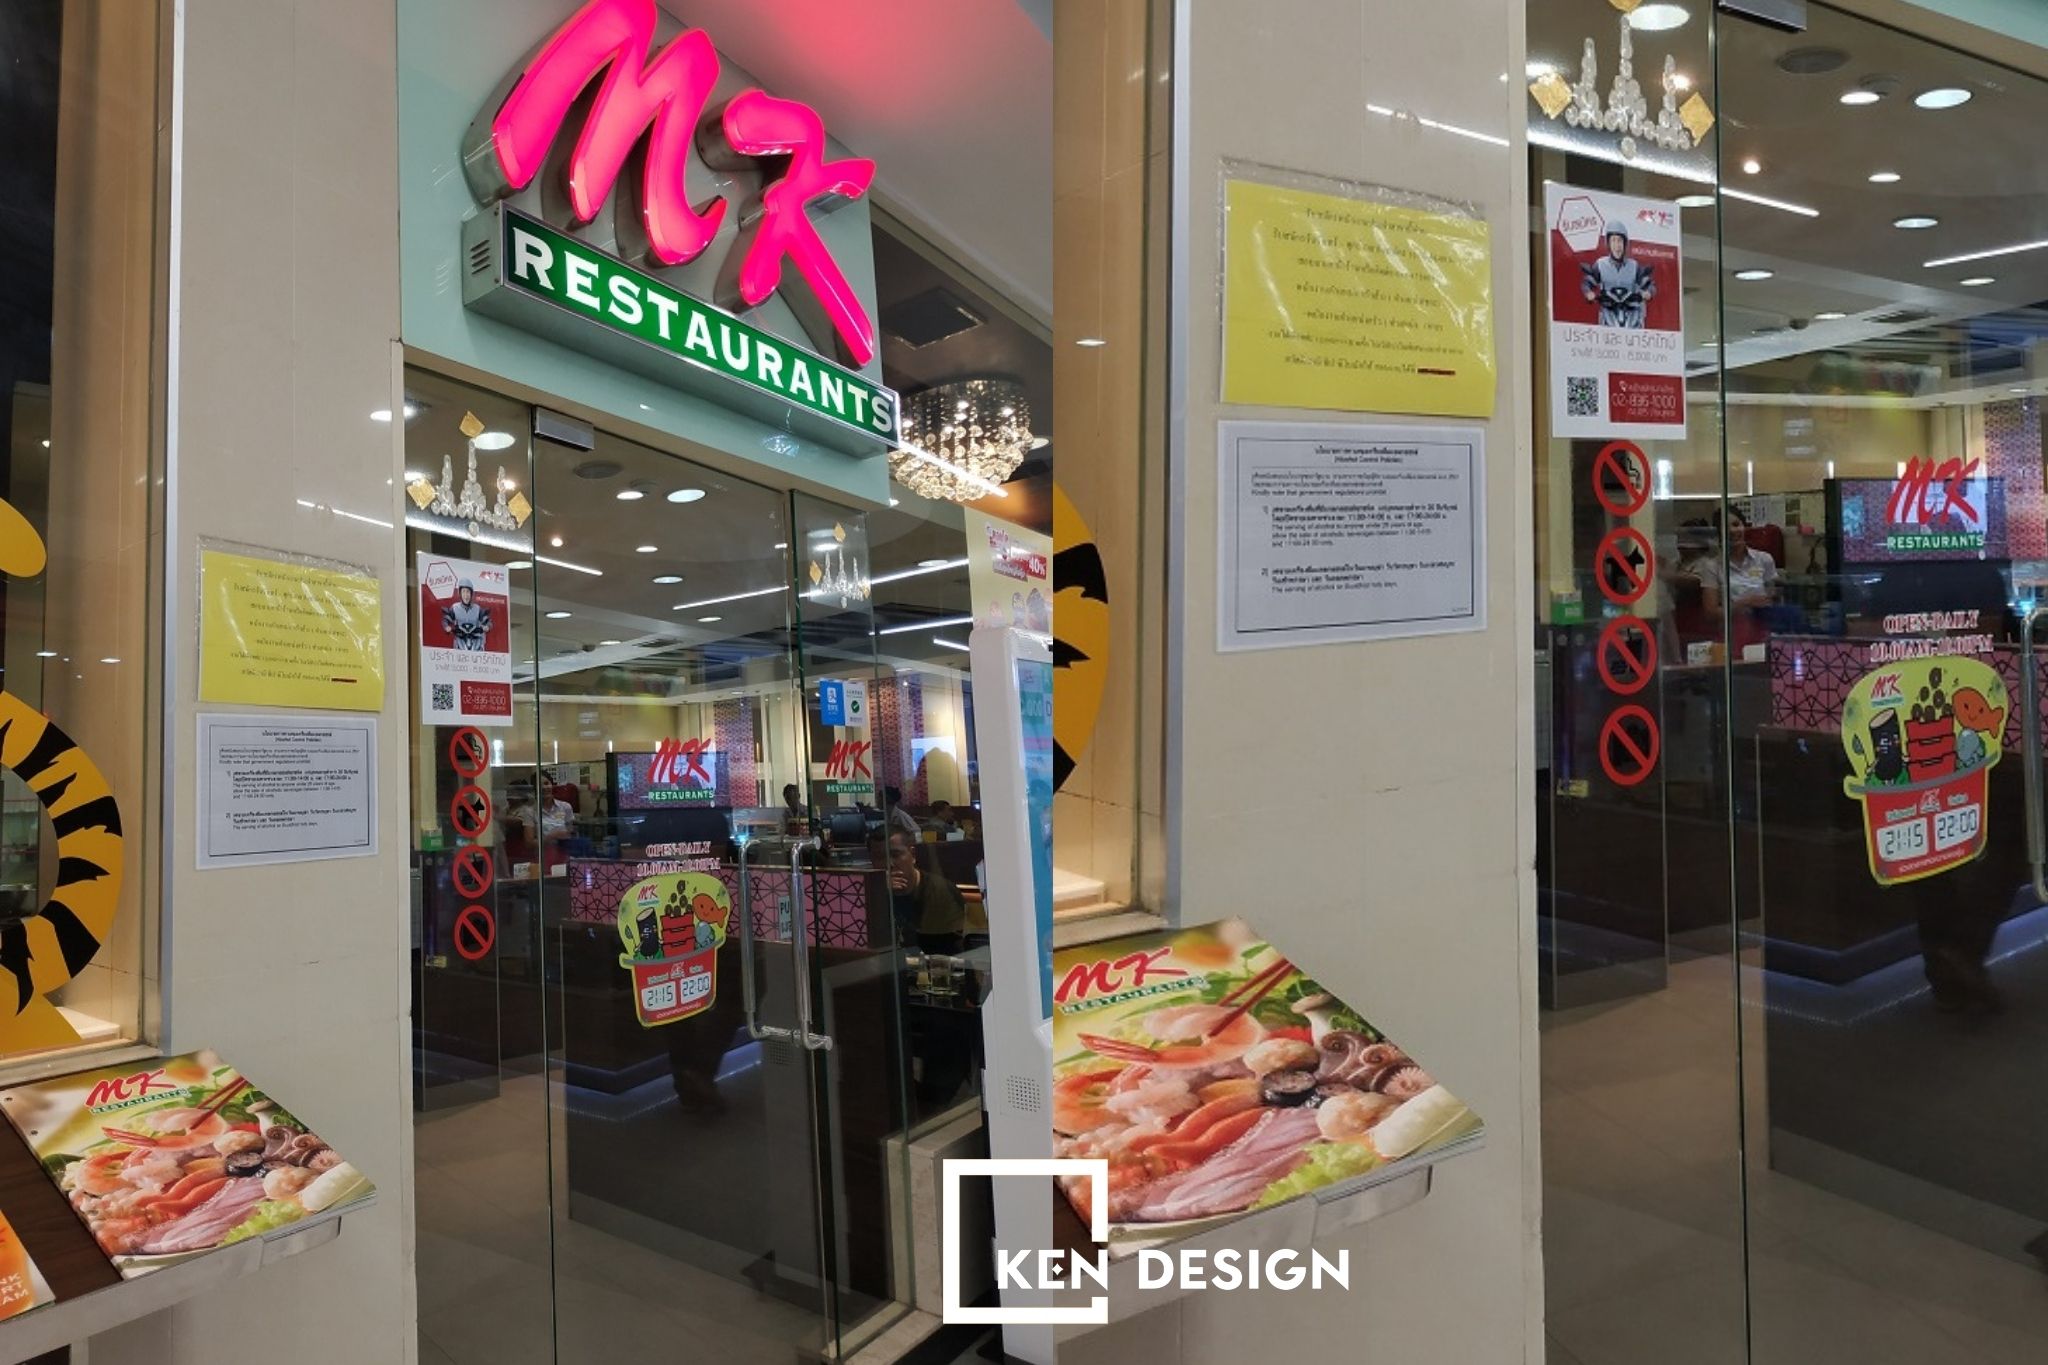 thiết kế MK Restaurants